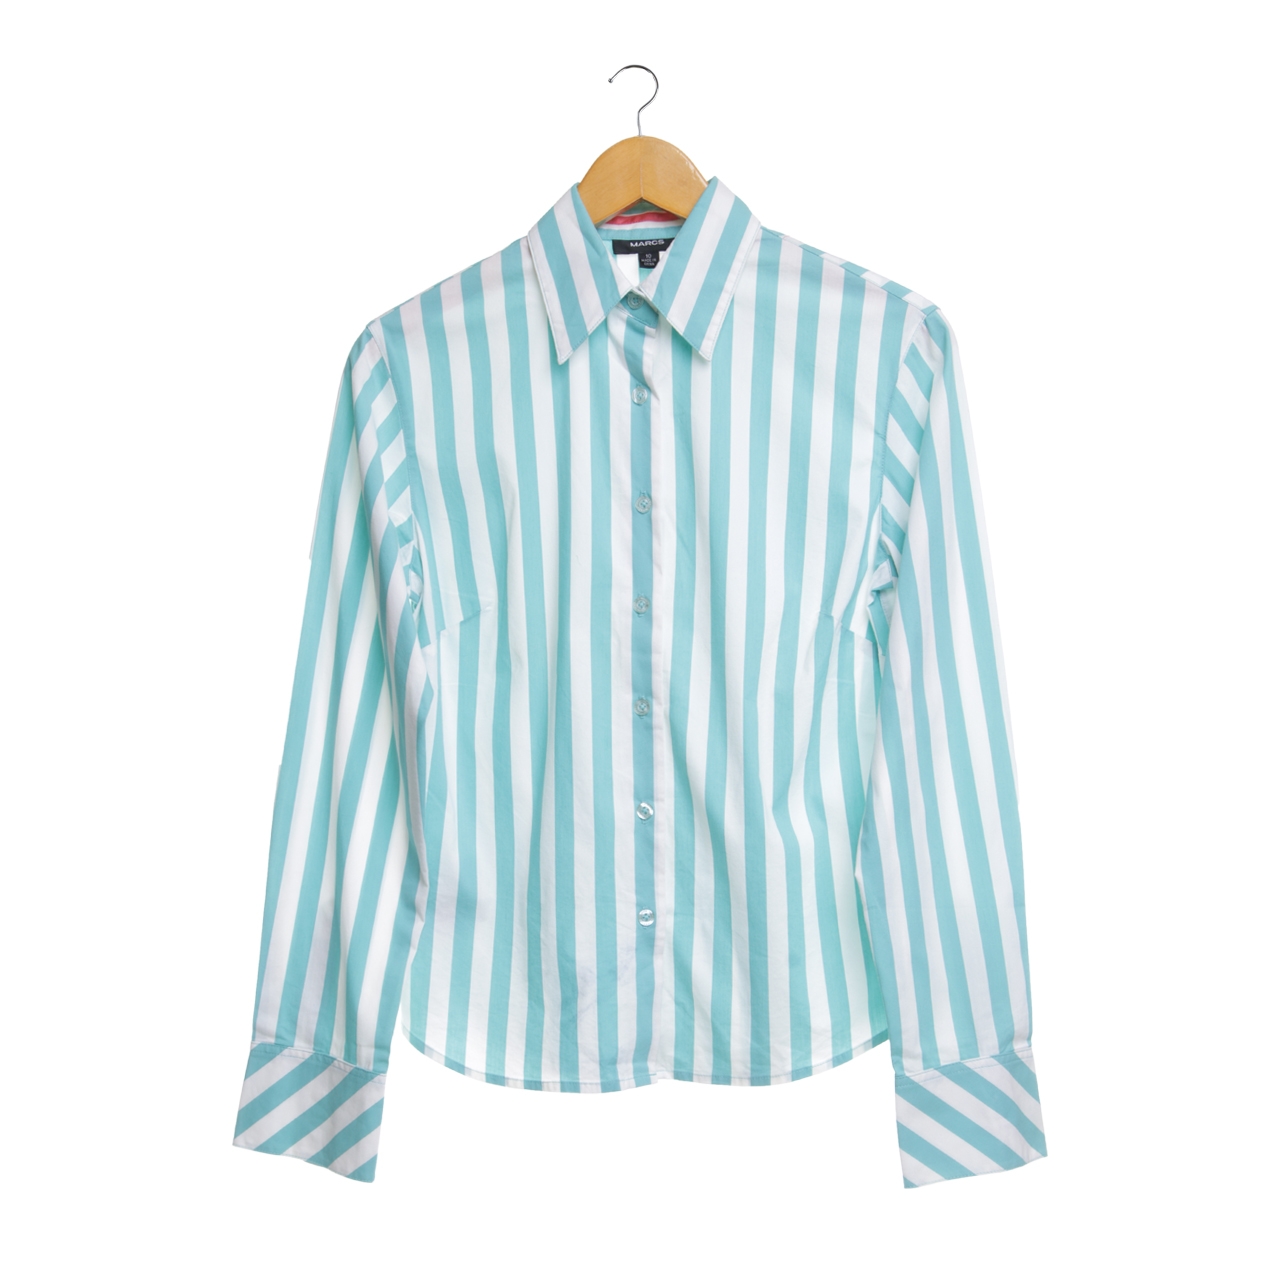 Marcs Turquoise Striped Shirt